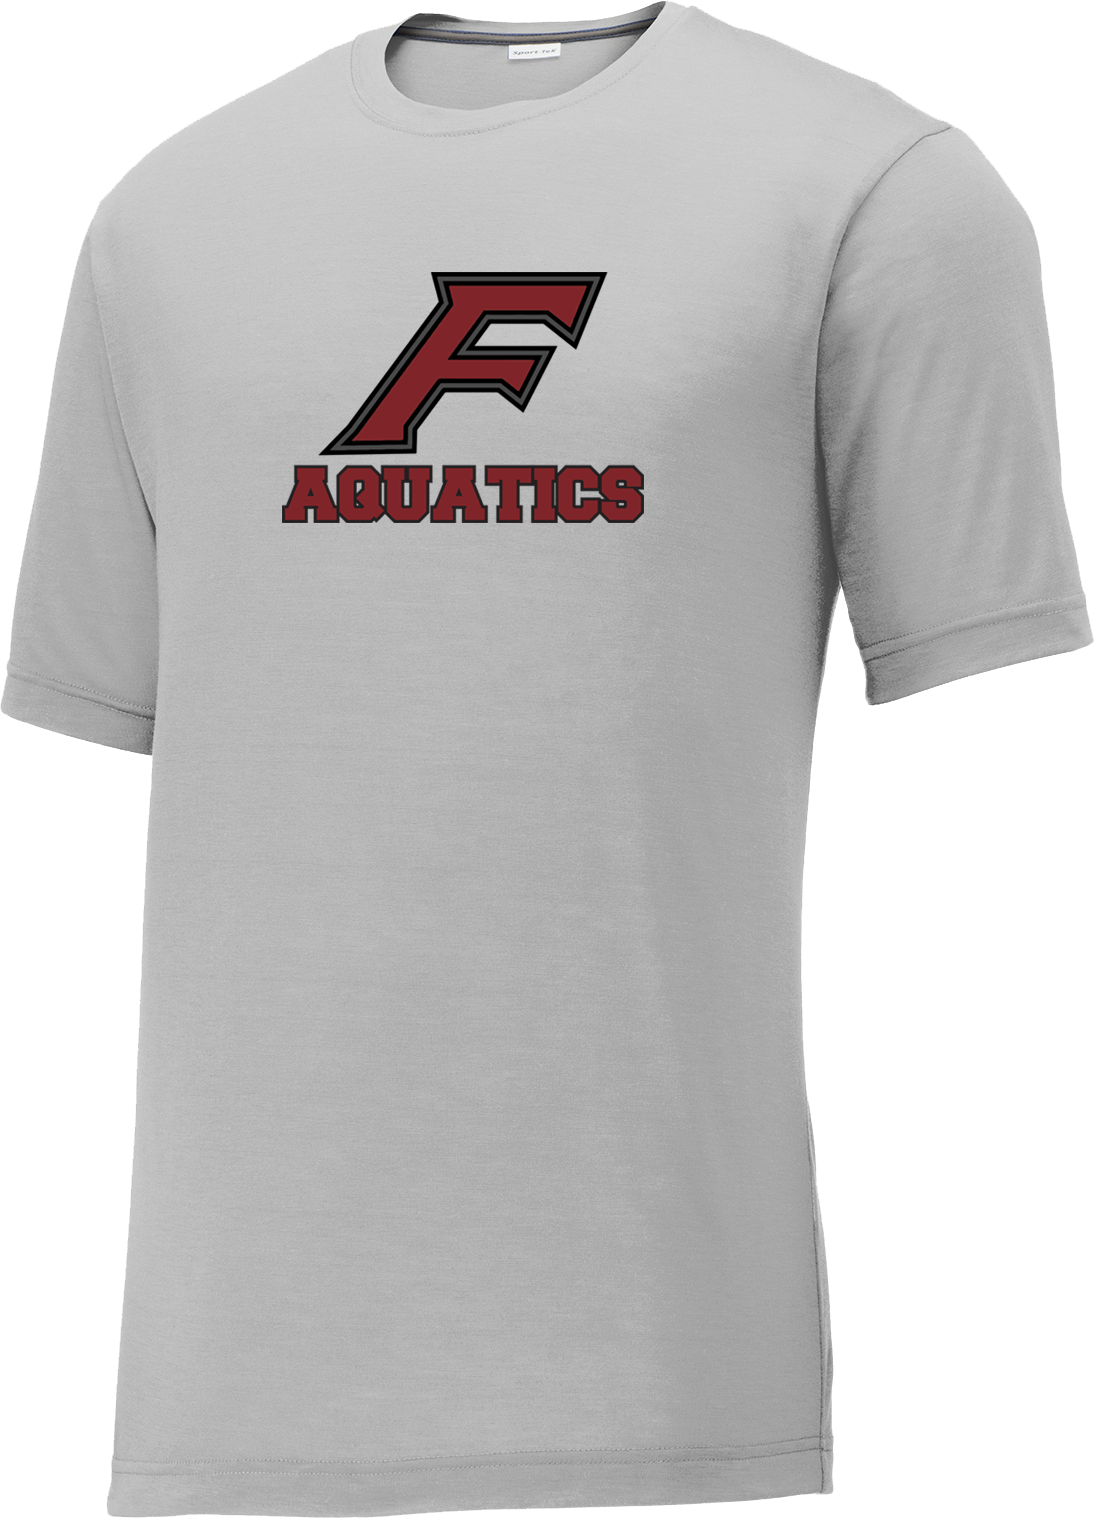 Farmington Aquatics Silver CottonTouch Performance T-Shirt